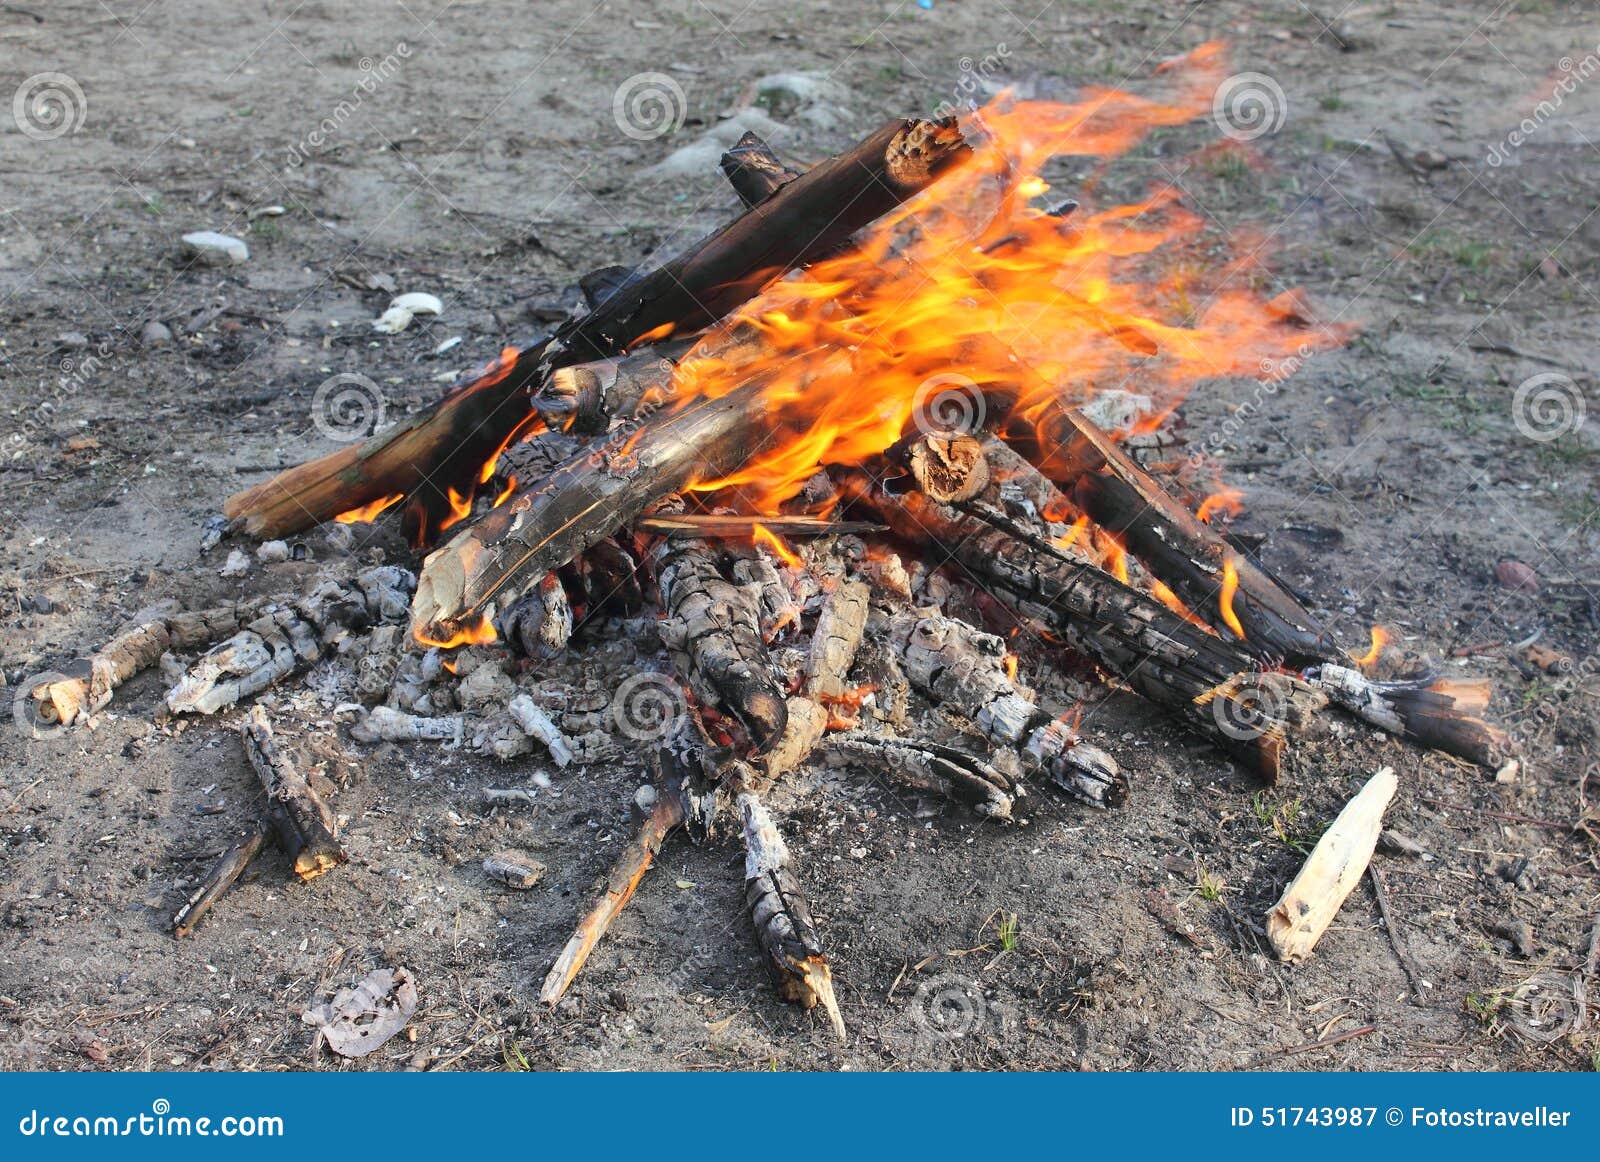 Balefire stock image. Image of heat, bright, fireplace - 51743987